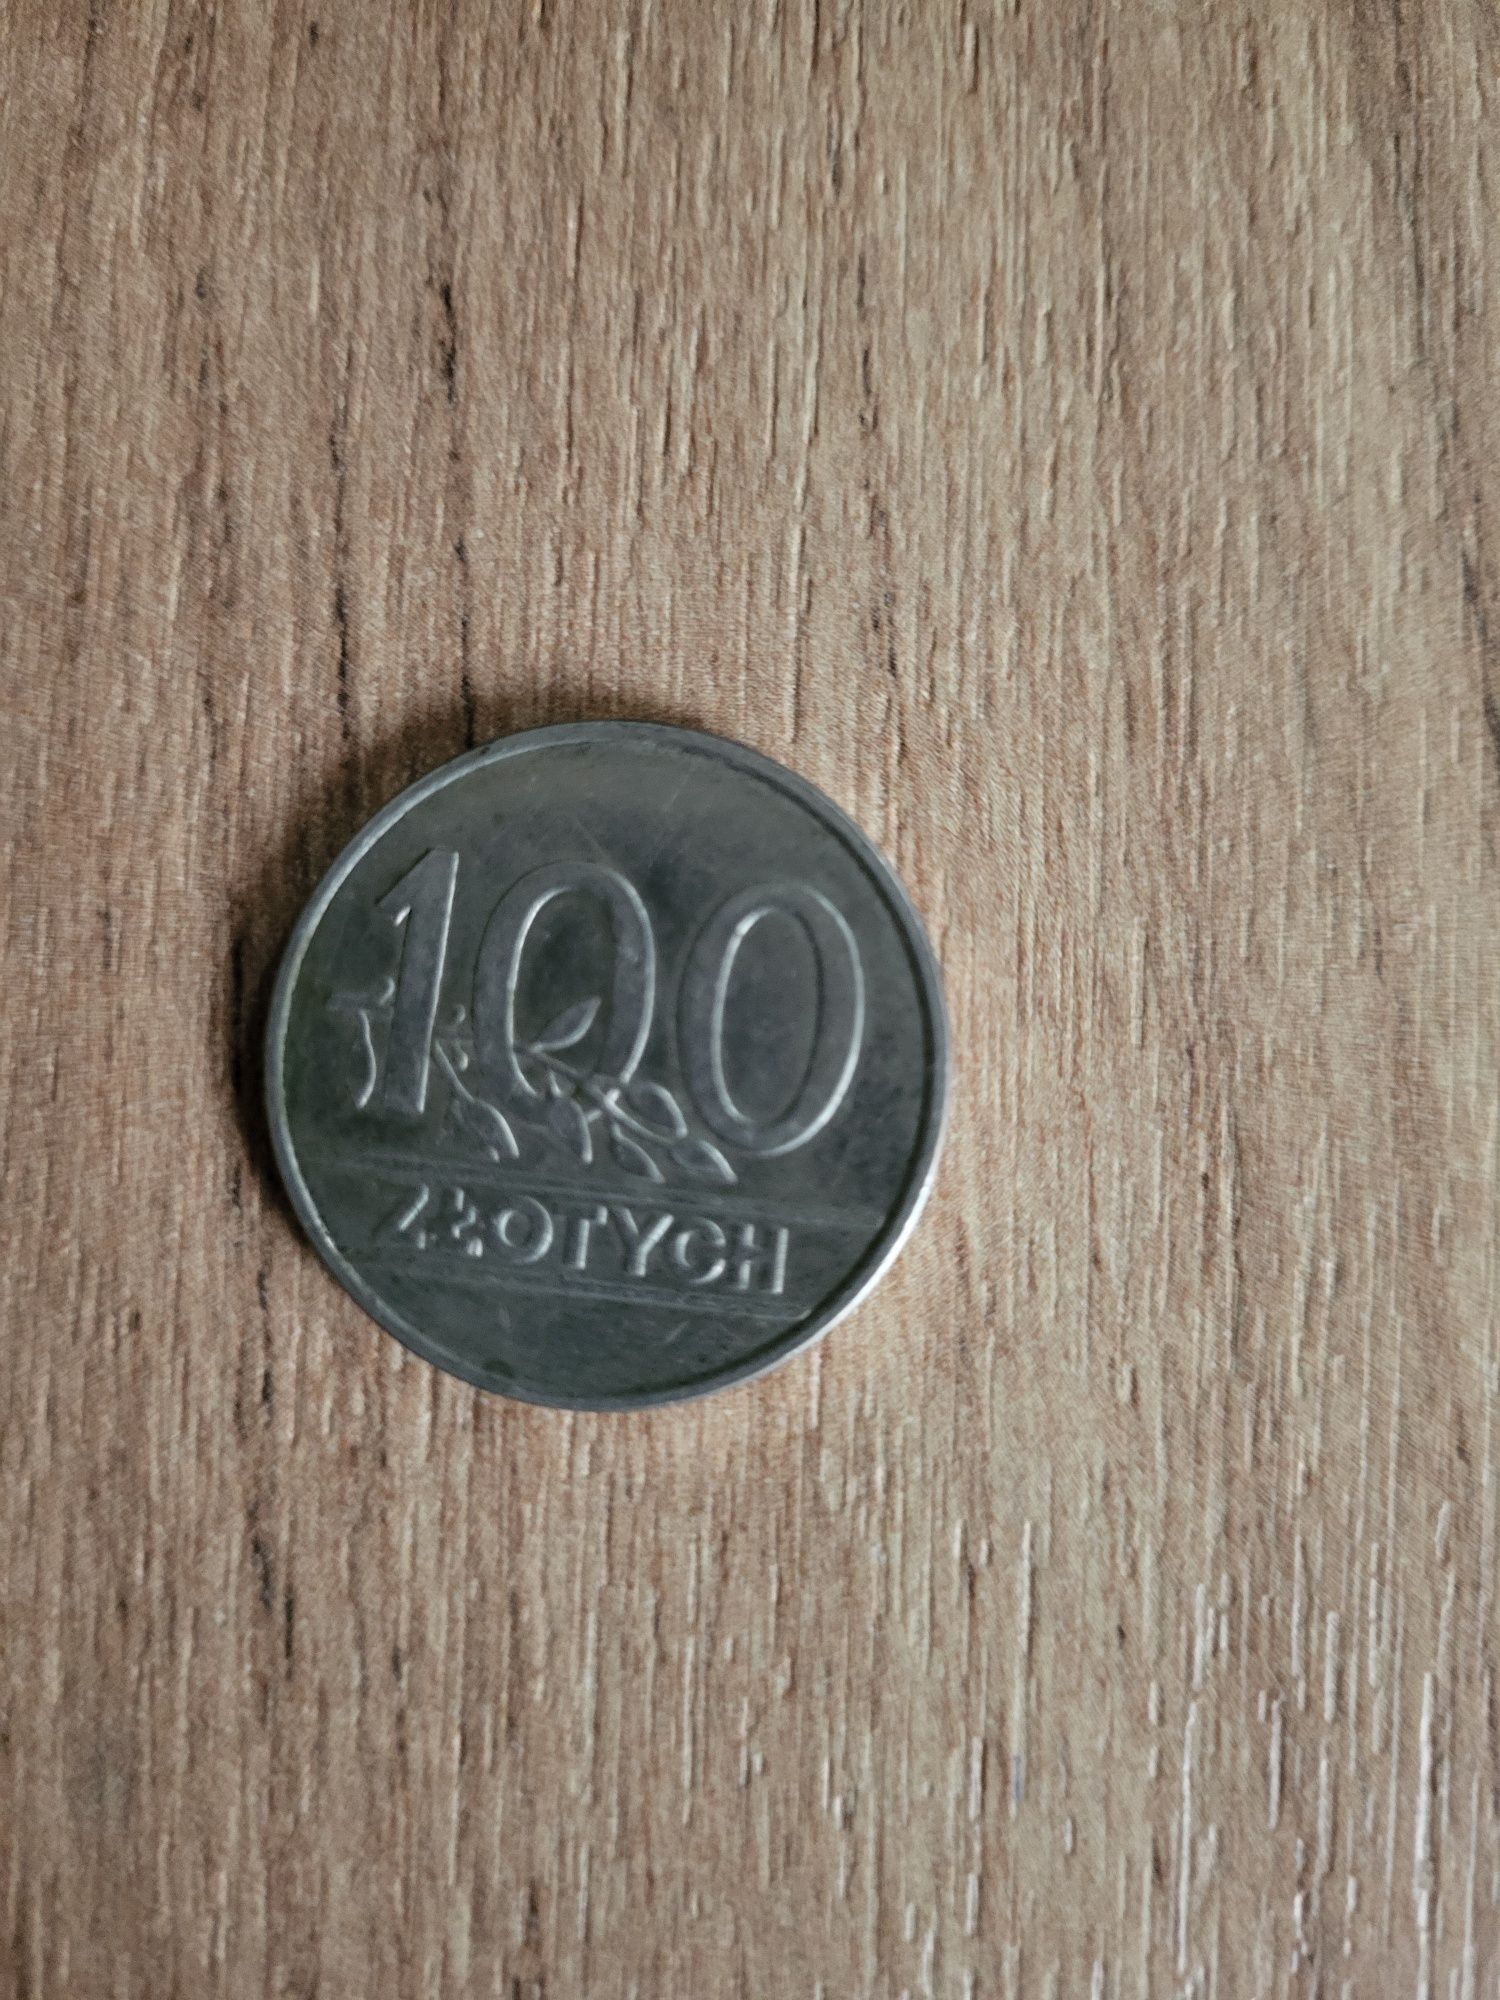 Moneta 100zl z 1990